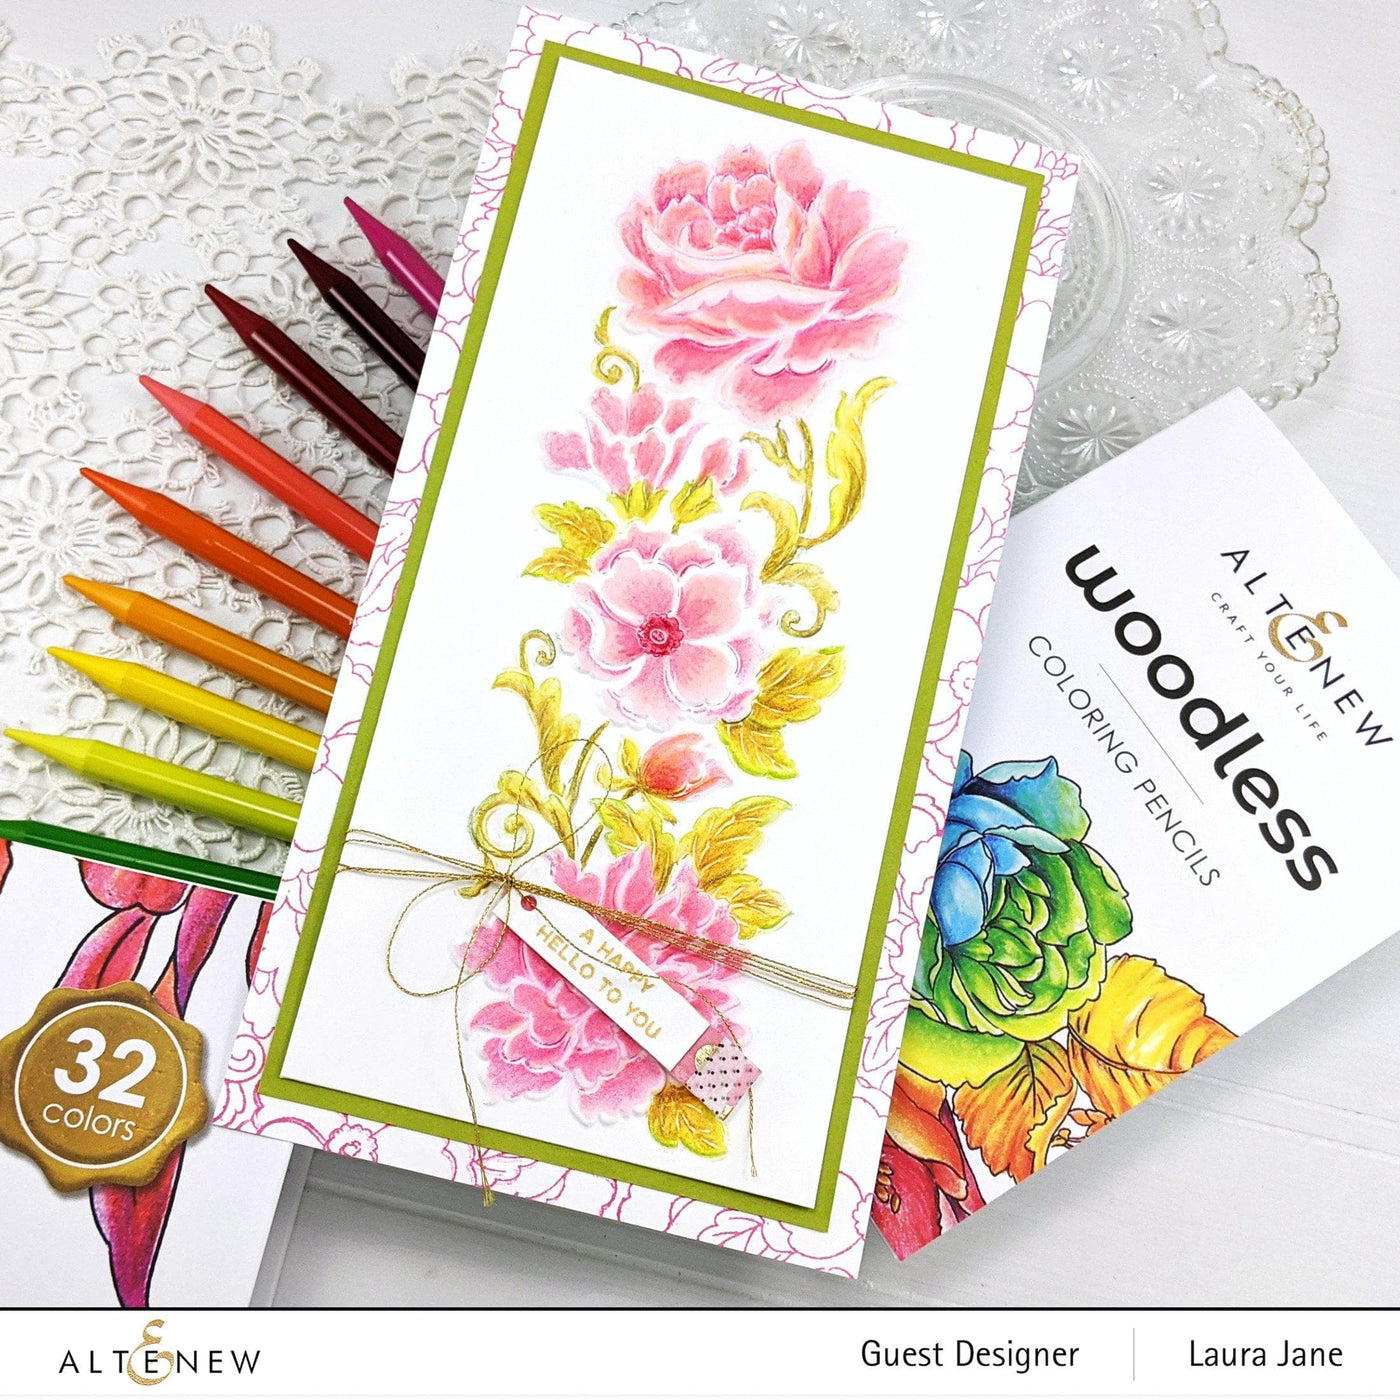 Altenew Release Bundle Woodless Coloring Pencils & In the Woodland Stamp Set Bundle